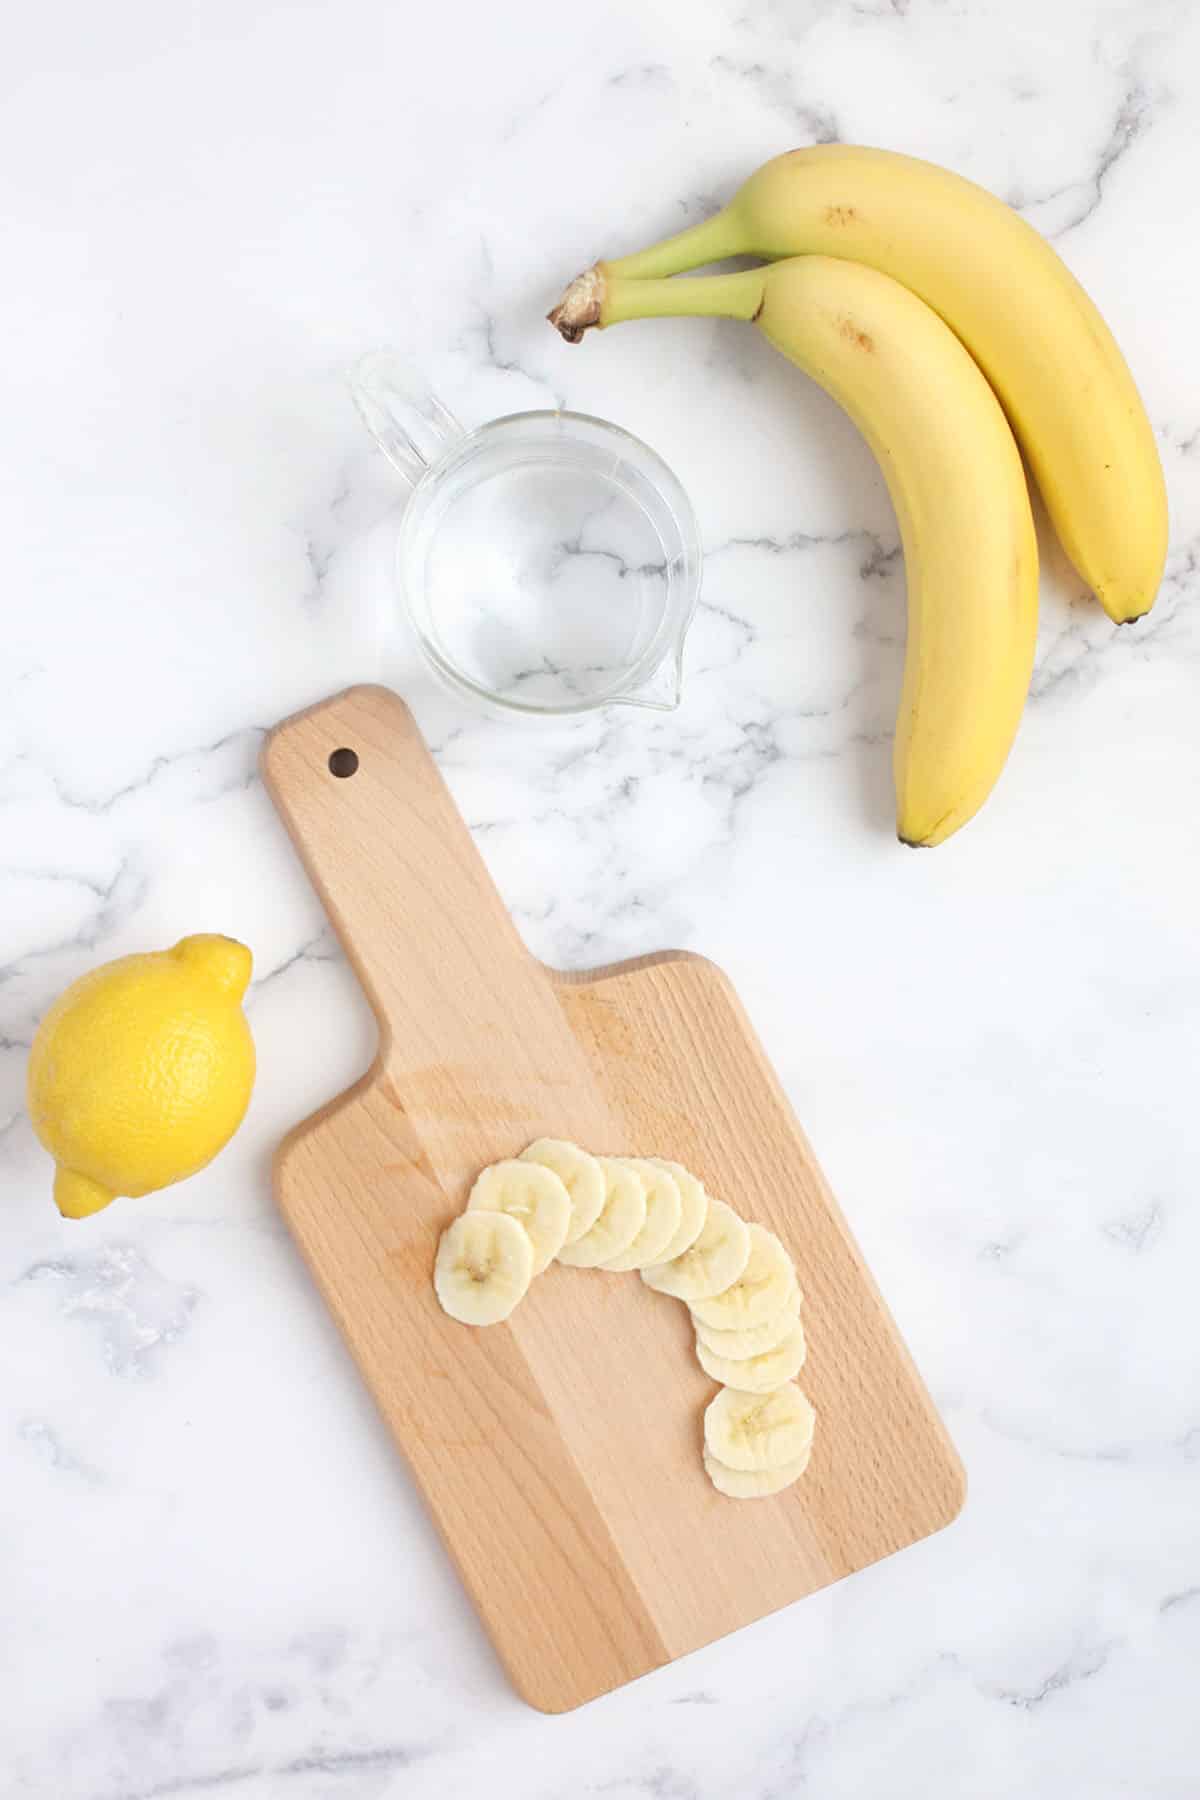 Ingredients for homemade banana chips: fresh banana, water and lemon juice